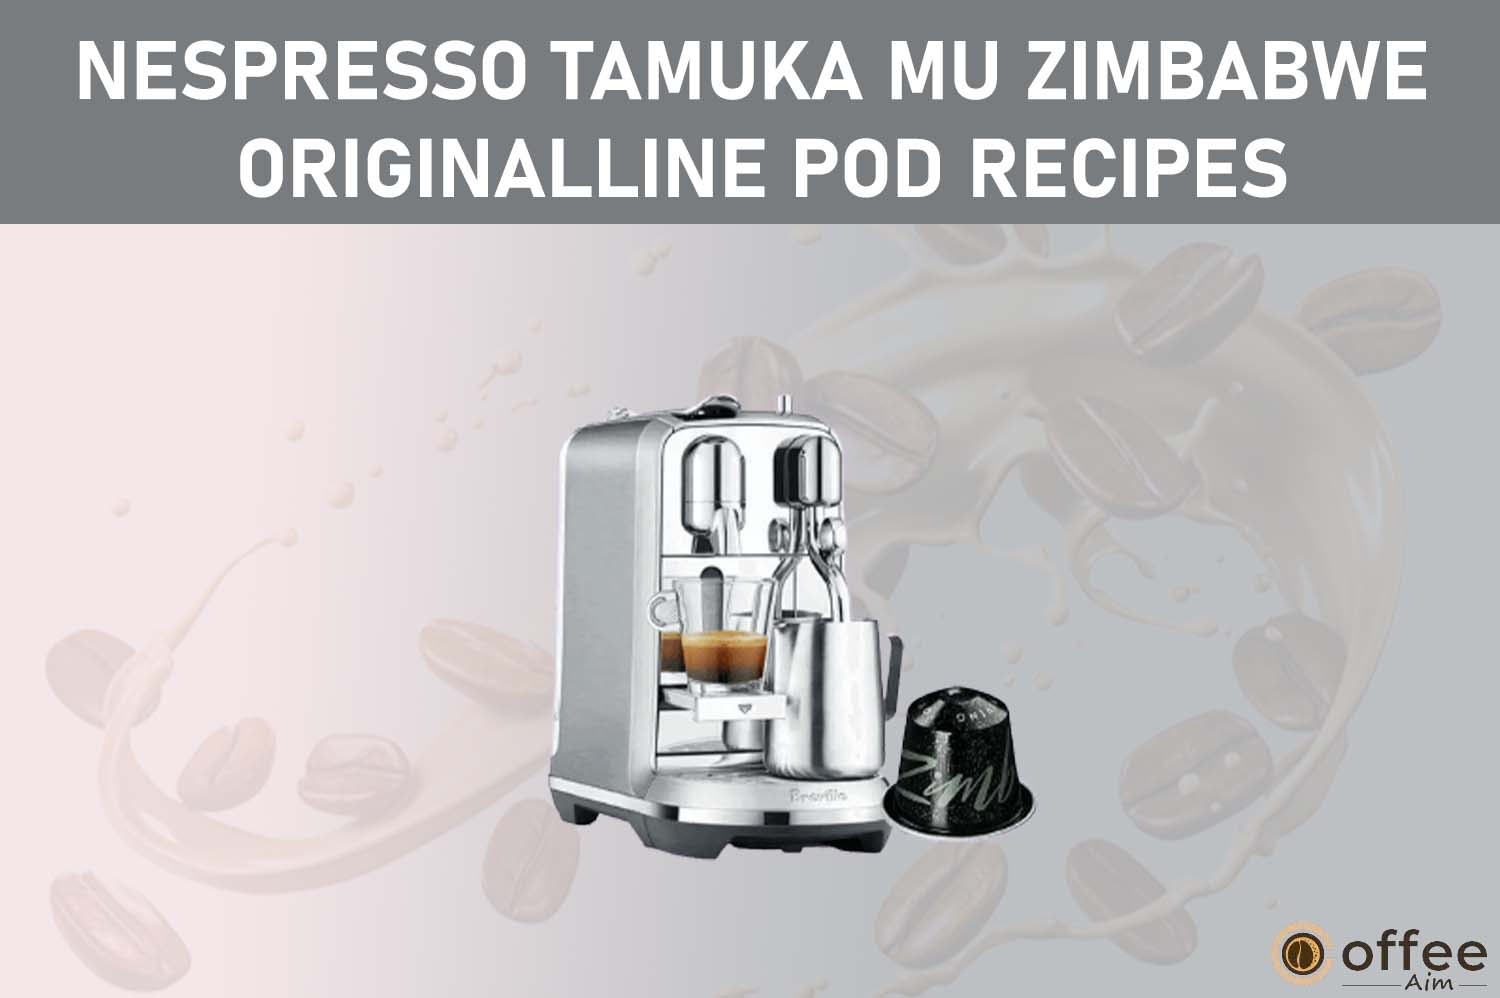 Featured image for the article "Nespresso Tamuka Mu Zimbabwe OriginalLine Pod Recipes"